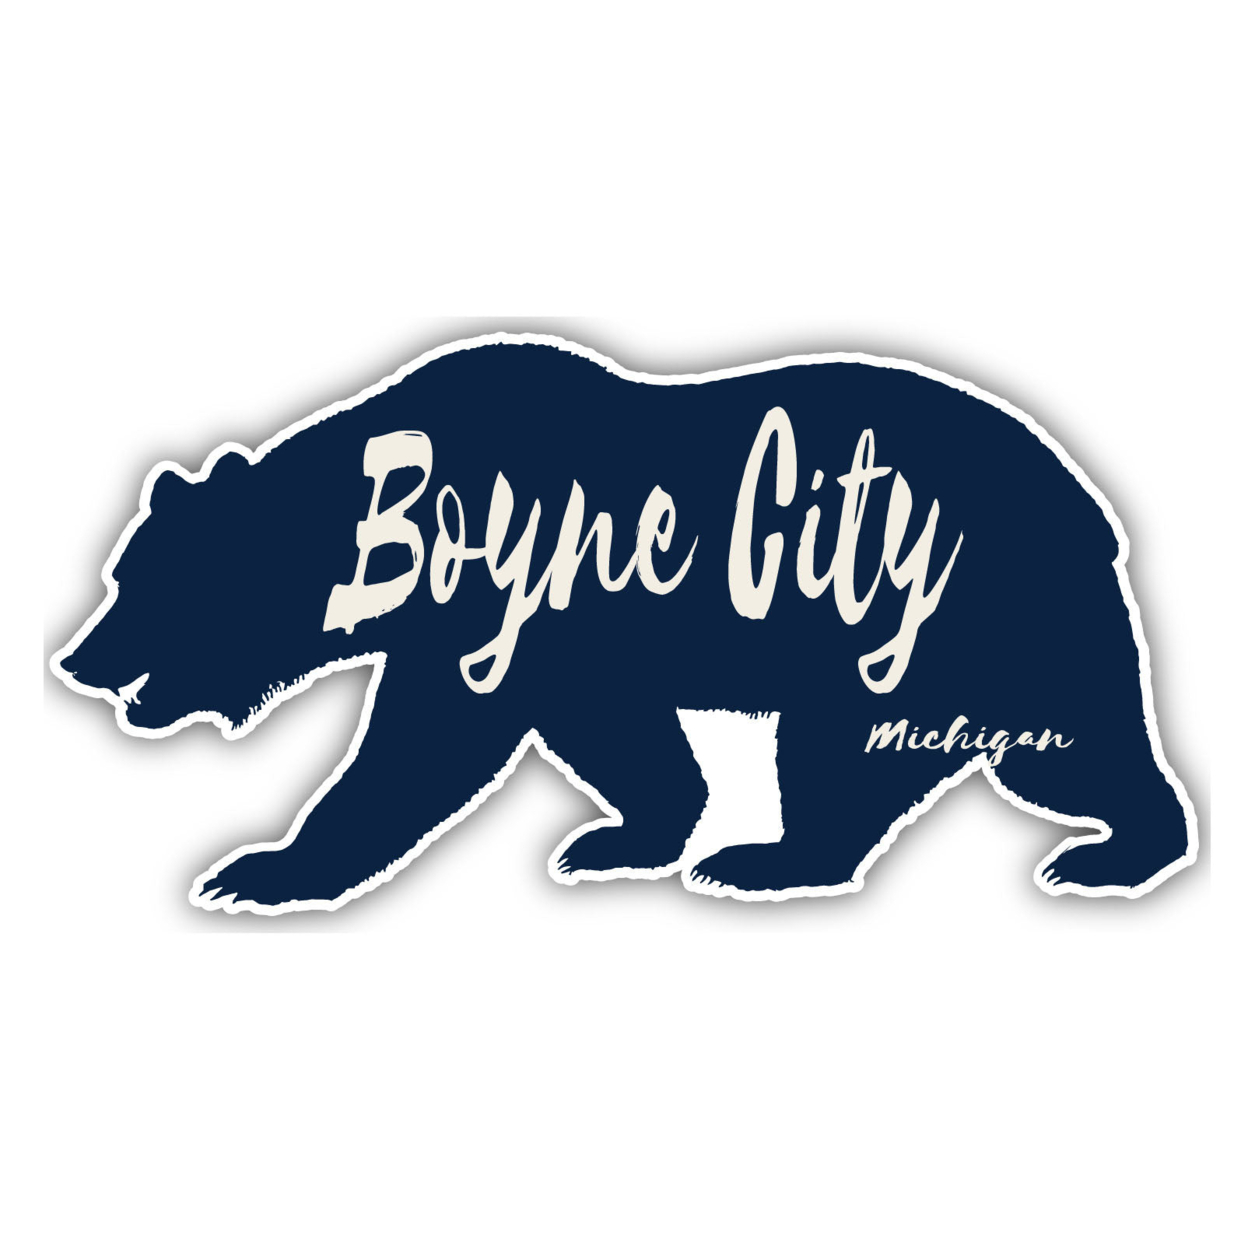 Boyne City Michigan Souvenir Decorative Stickers (Choose Theme And Size) - Single Unit, 4-Inch, Tent